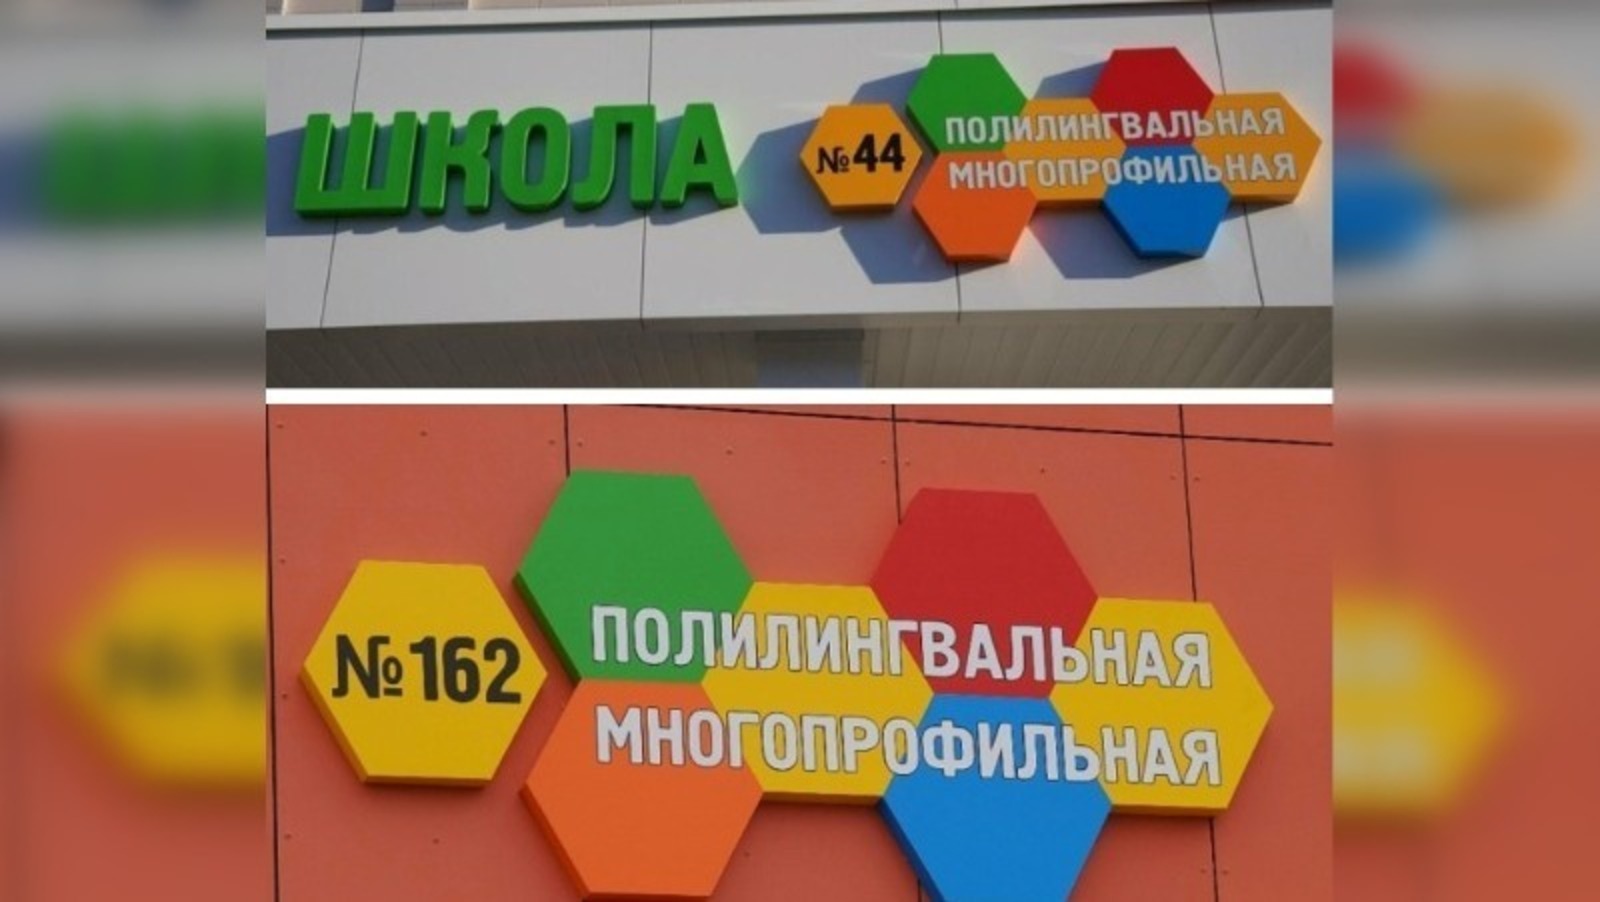 Өфө ҡалаһының 44-се, 162-се мәктәптәре 1-се һәм 2-се республика полилингваль гимназиялары тип үҙгәртелде